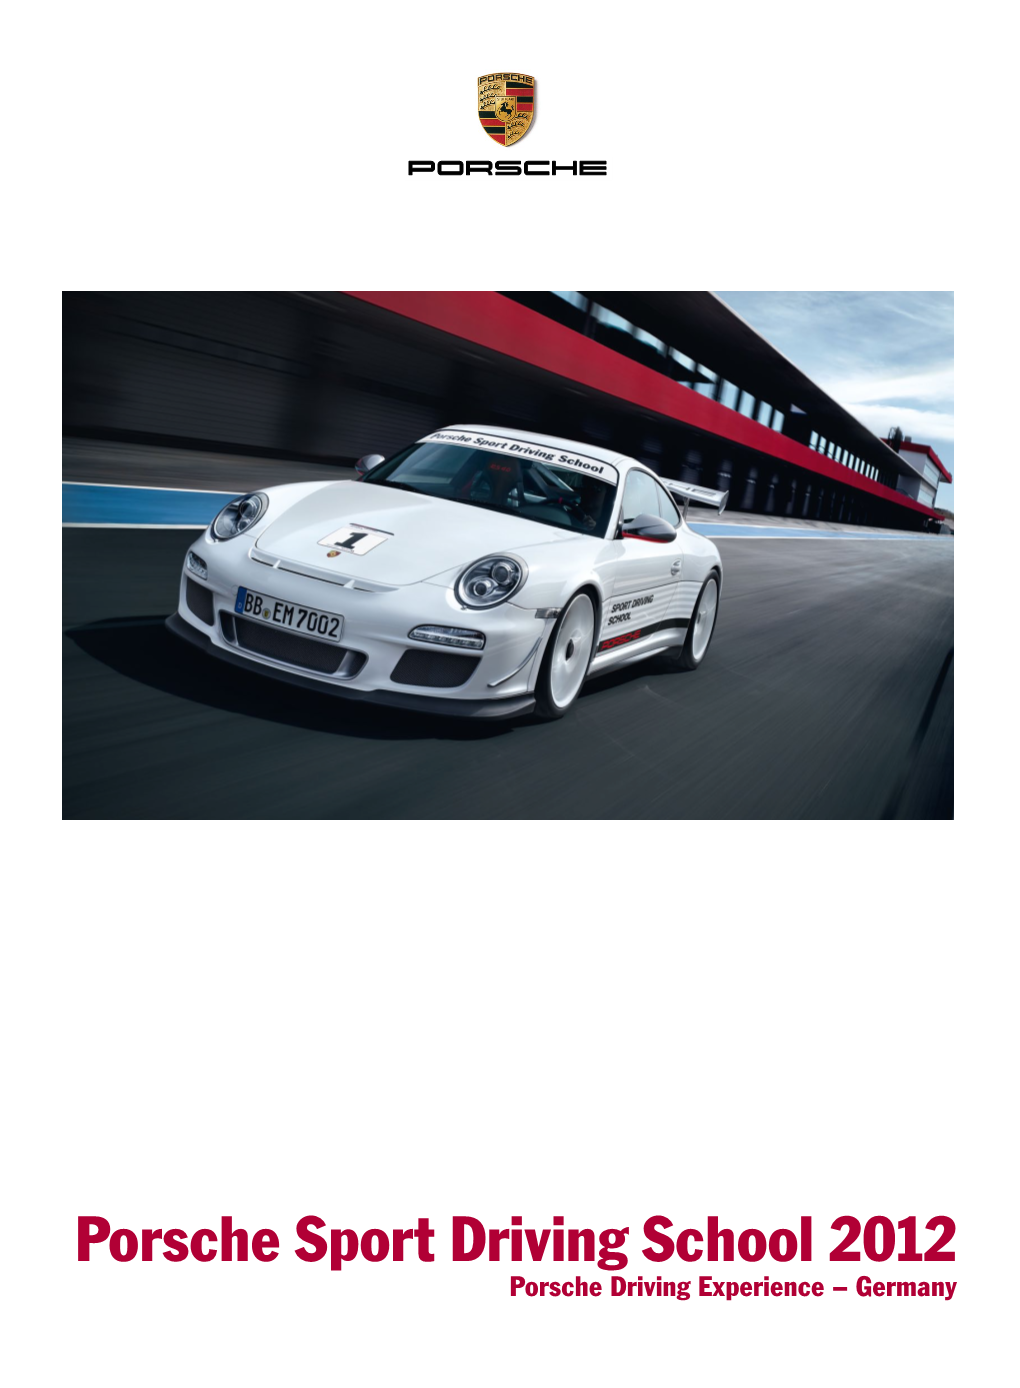 Porsche Sport Driving School 2012 WSL81201000320 GB/WW P Ors C H E